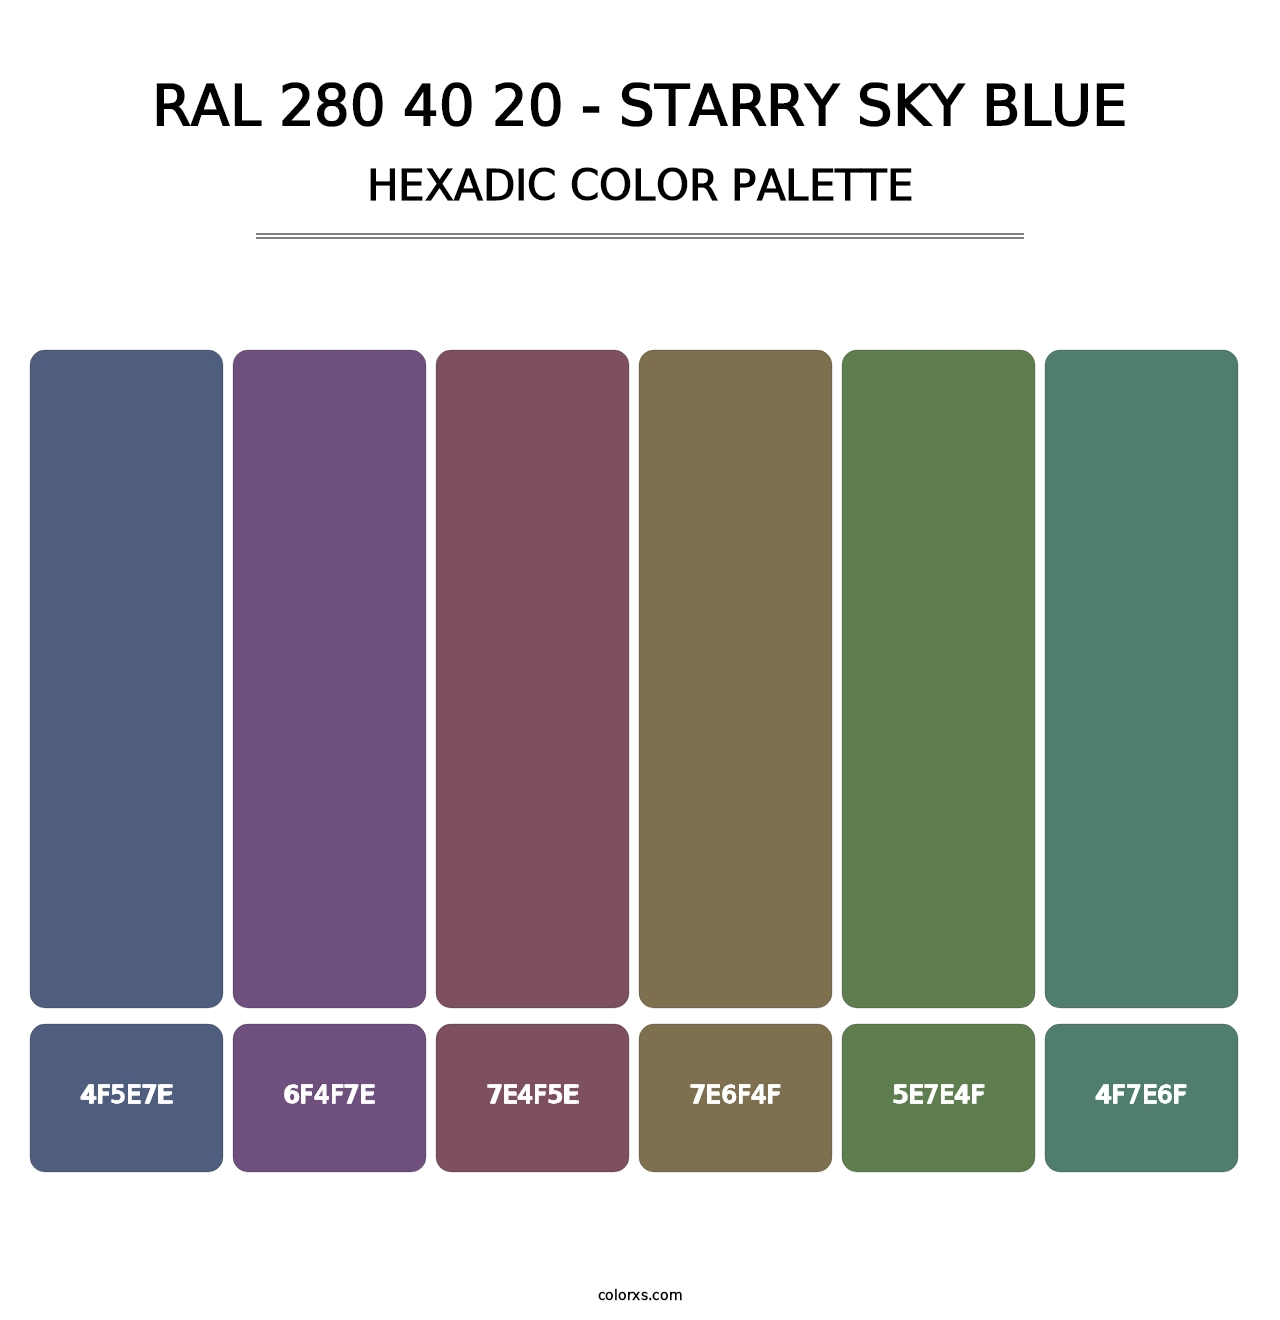 RAL 280 40 20 - Starry Sky Blue - Hexadic Color Palette